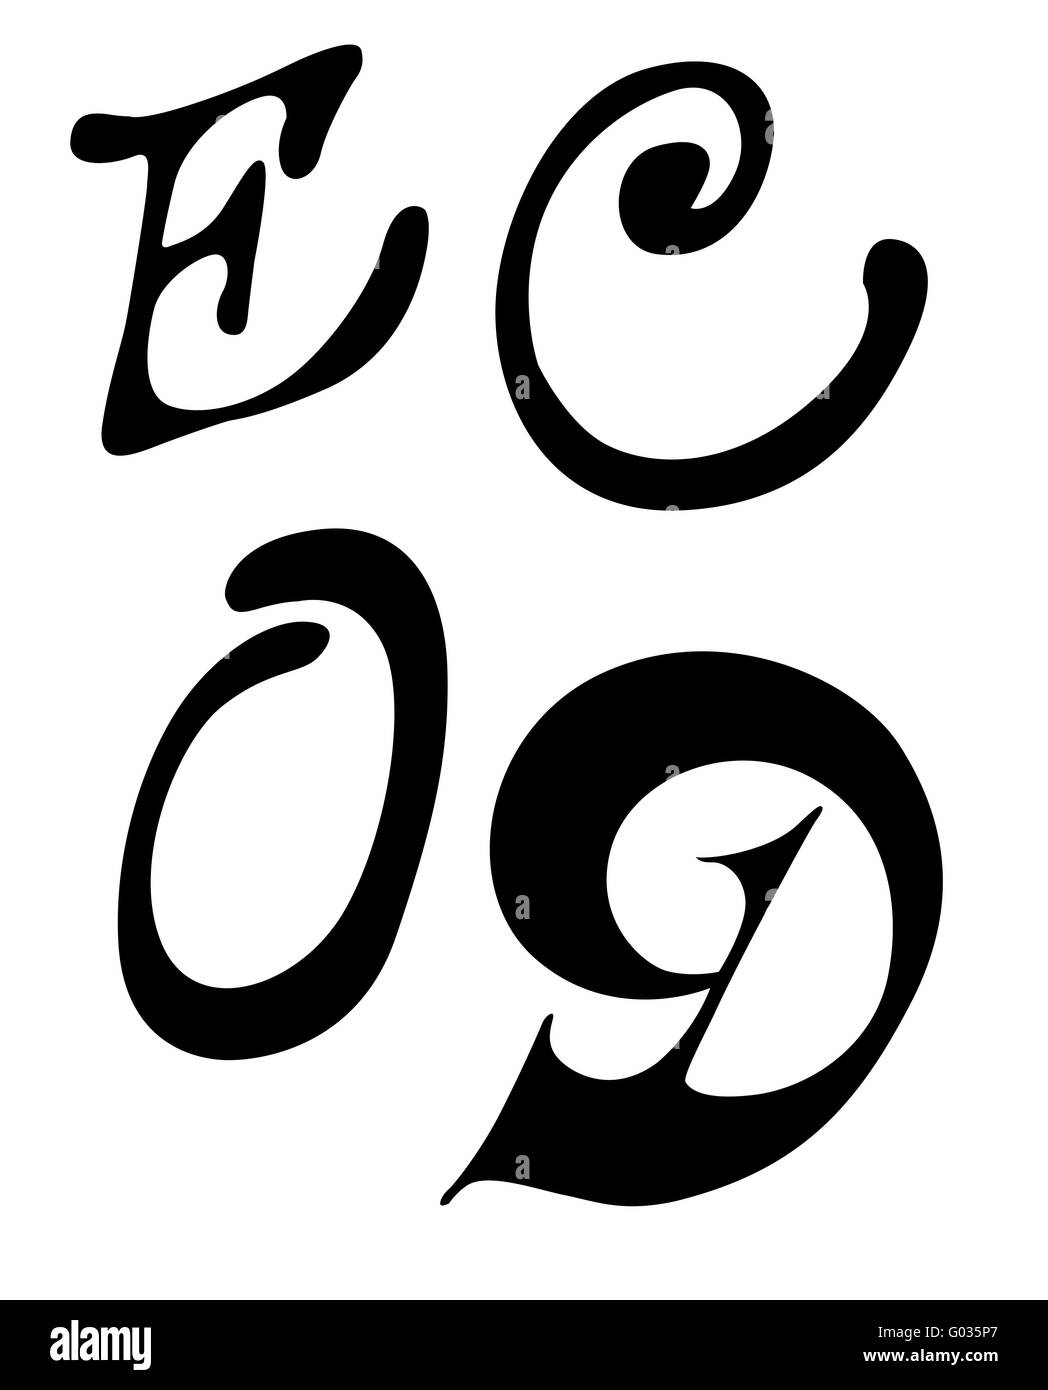 vector letter E, C, O, D on white background Stock Photo